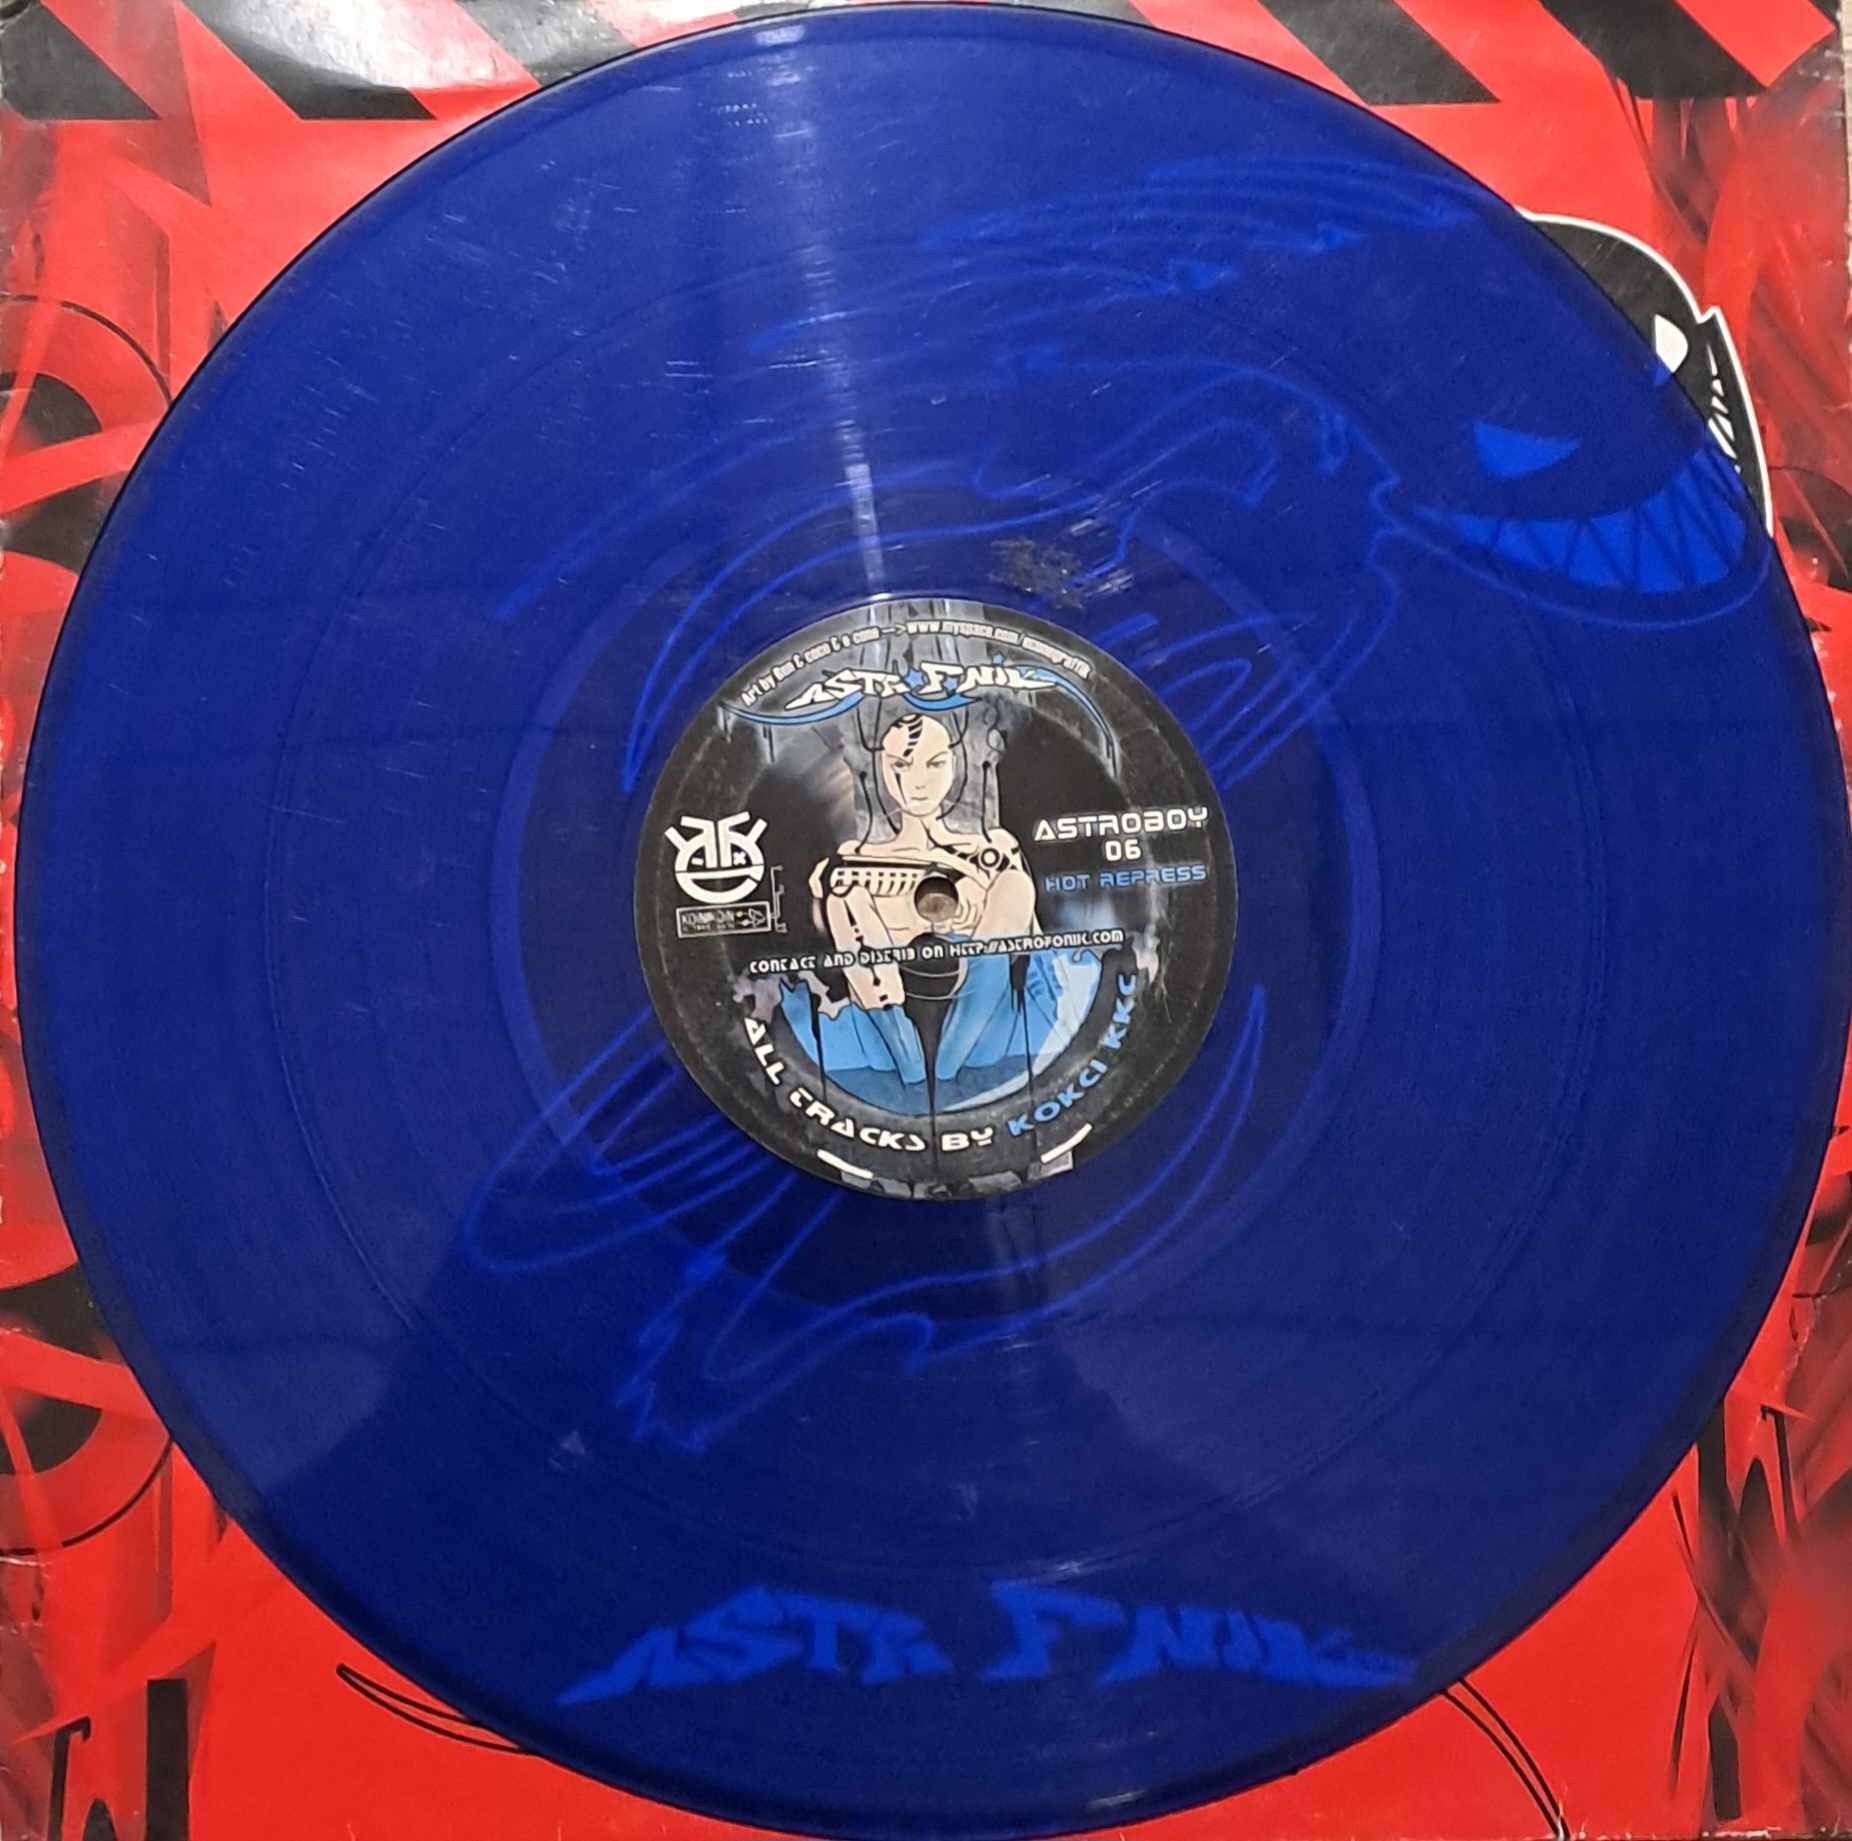 Astroboy 06 (bleu transparent) - vinyle tribecore